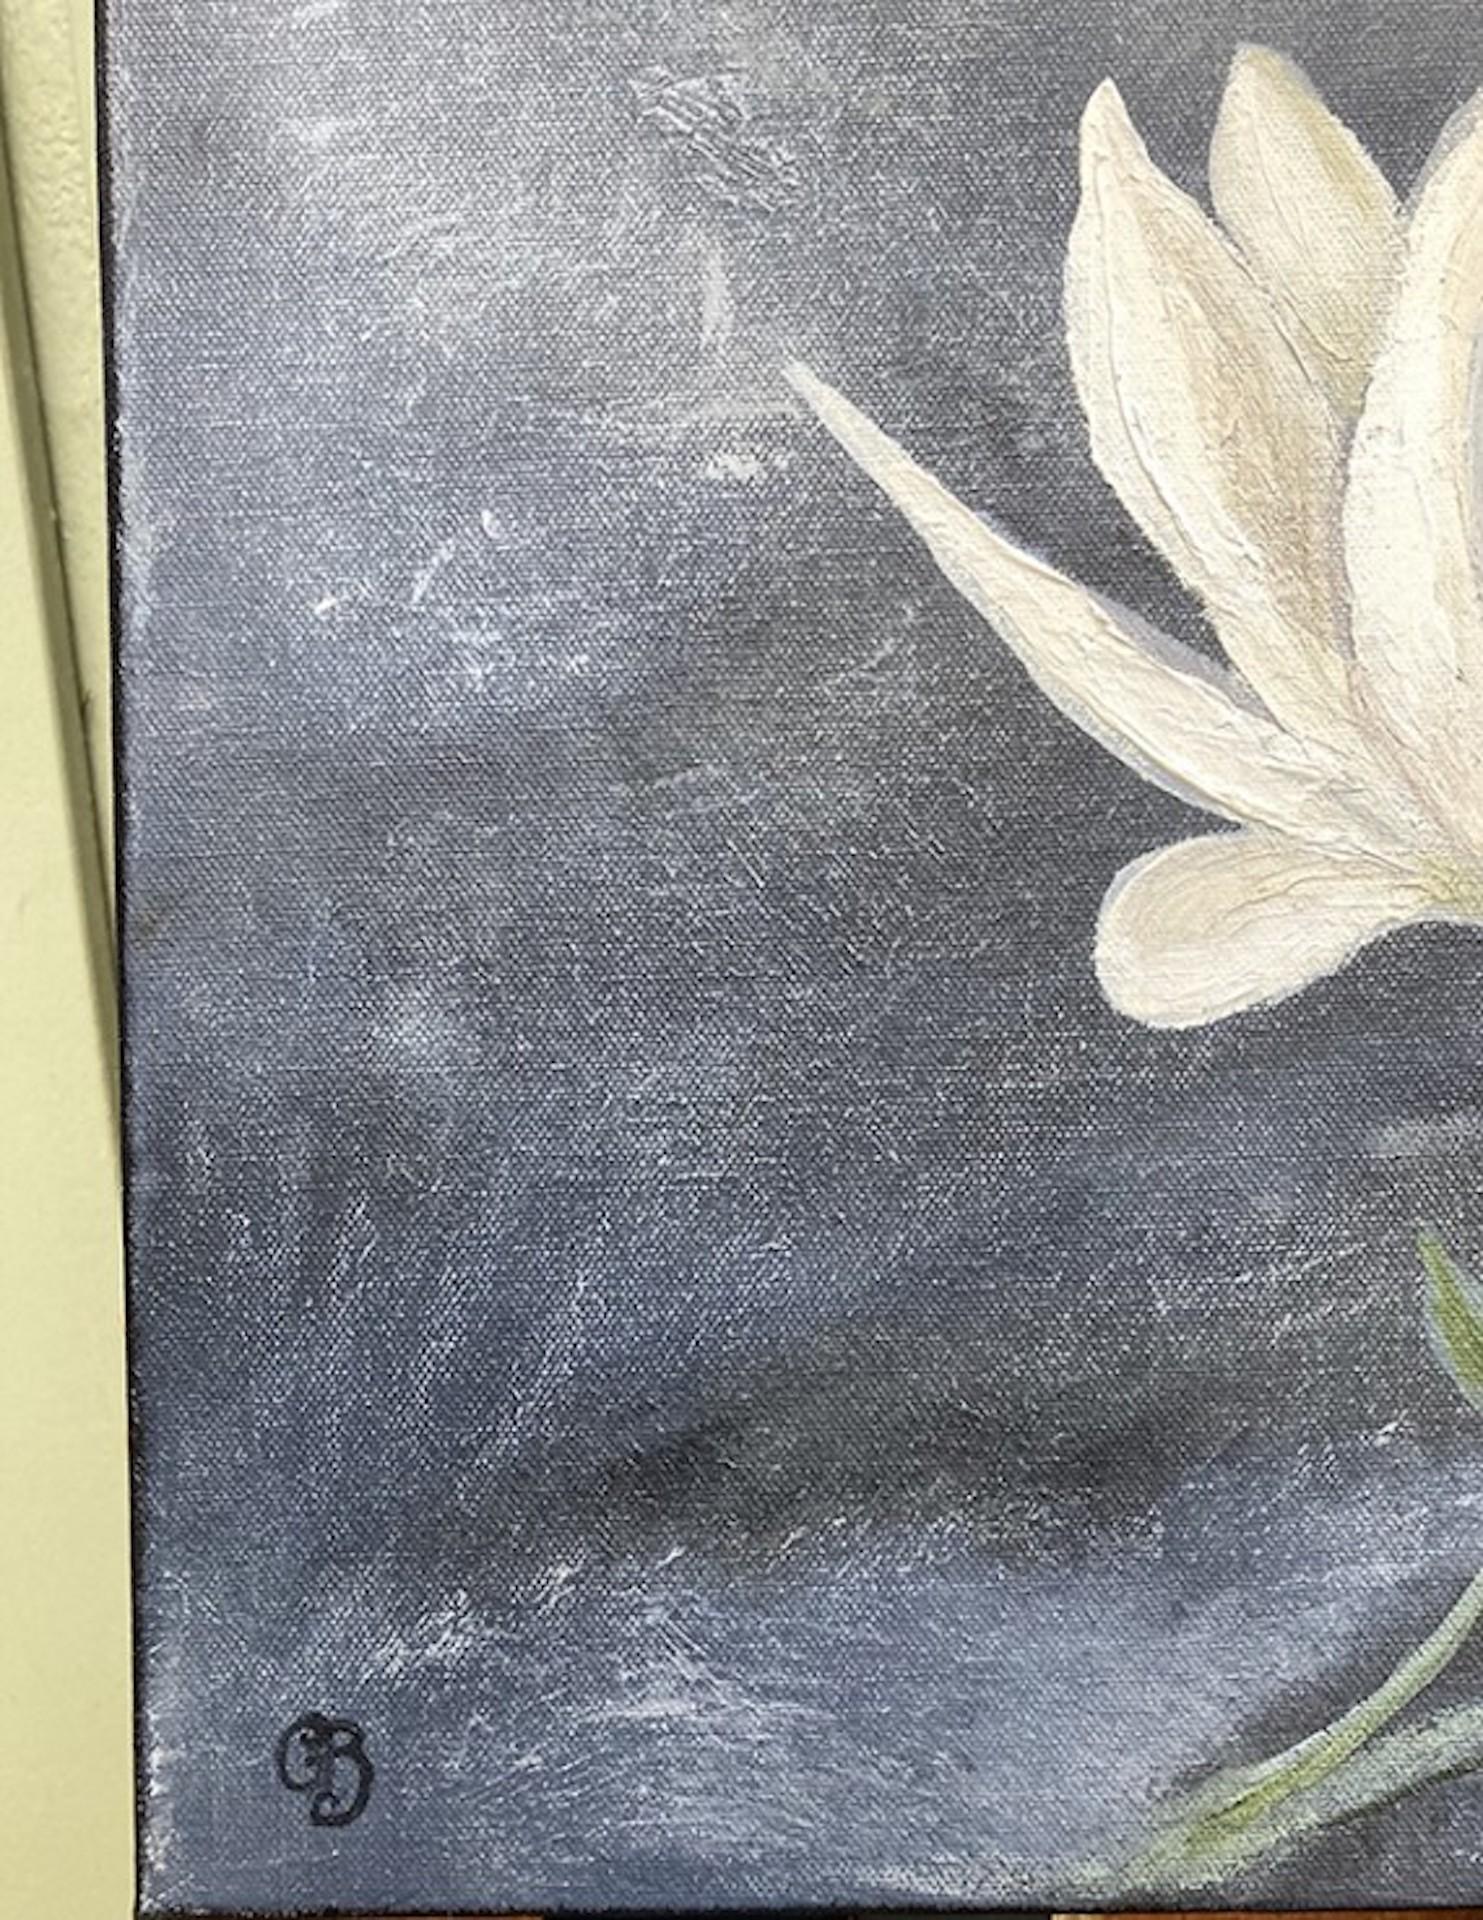 Magnolia In The Mist, Gemma Bedford, Original Painting, Floral Still Life Art For Sale 5